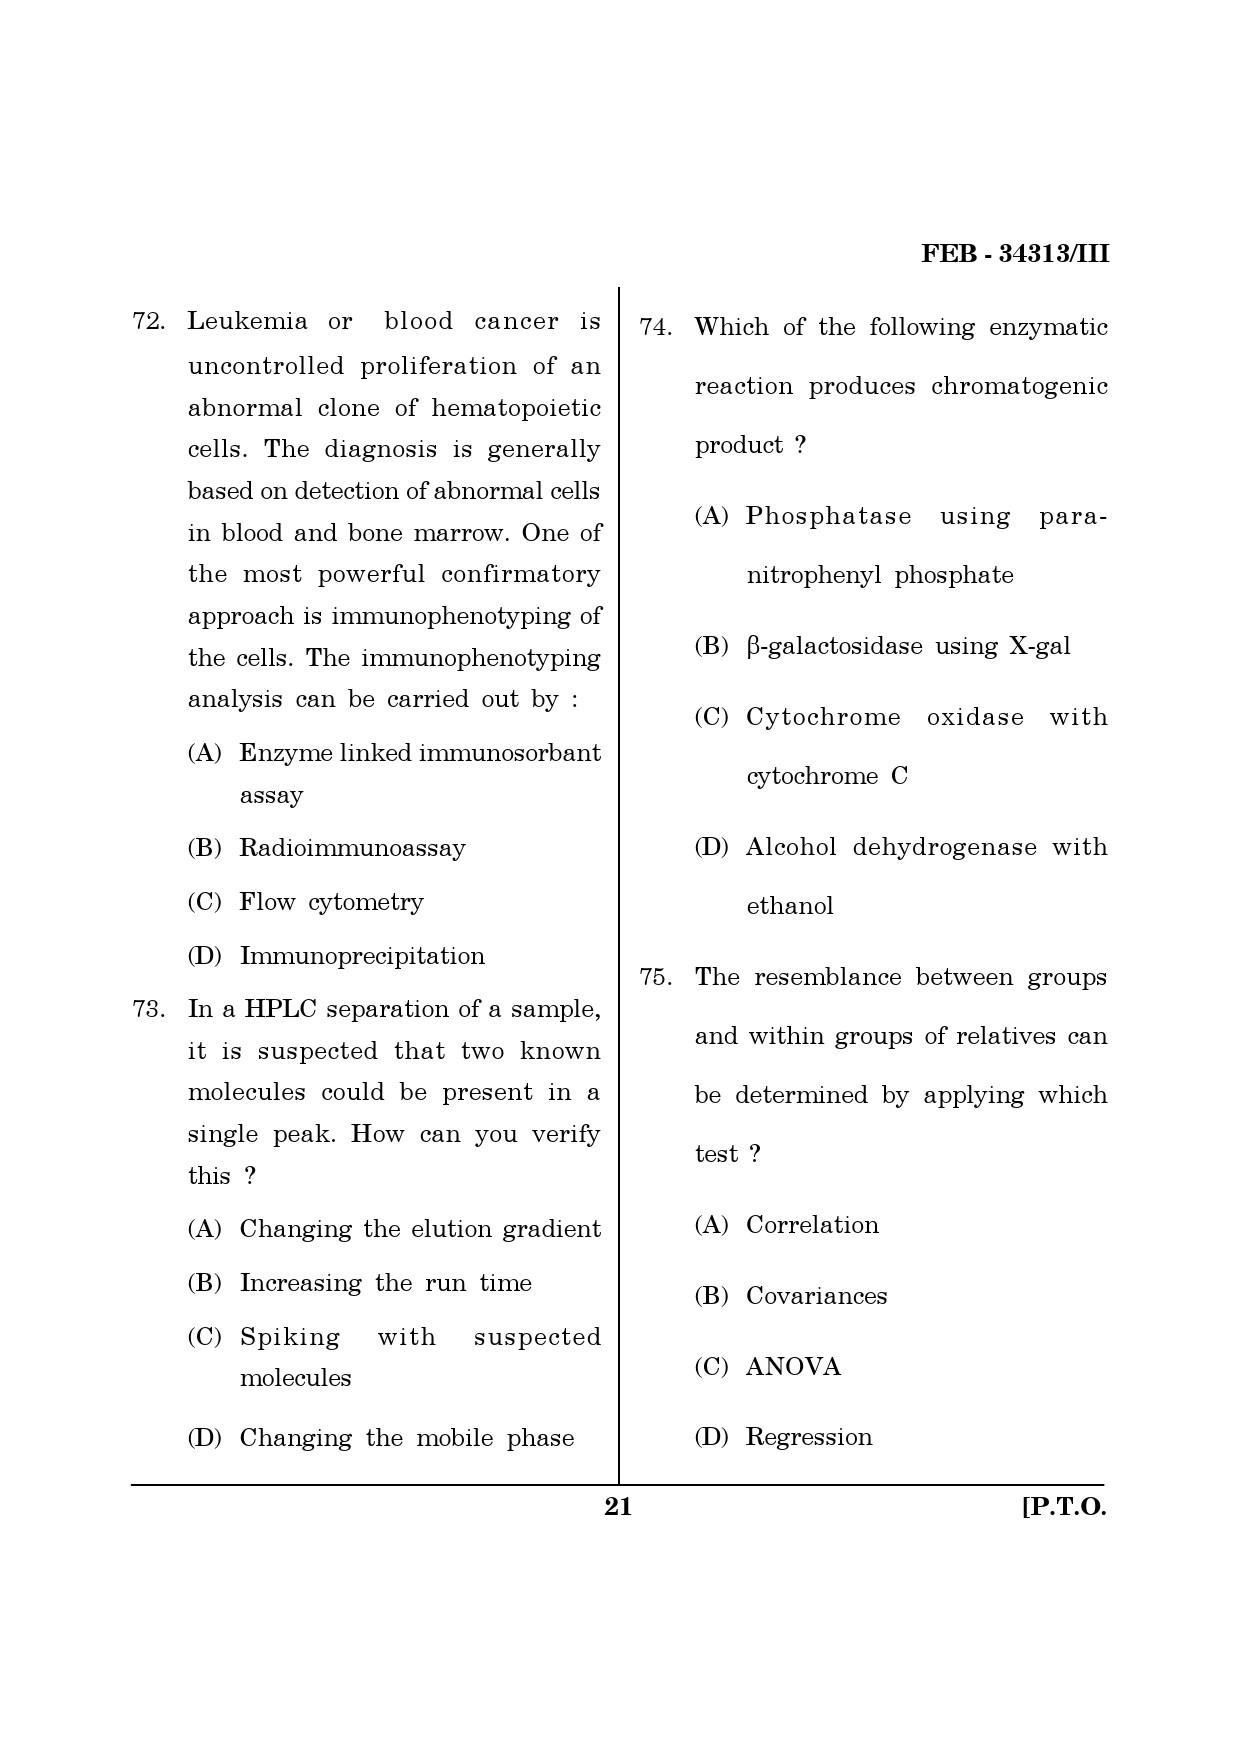 Maharashtra SET Life Sciences Question Paper III February 2013 21